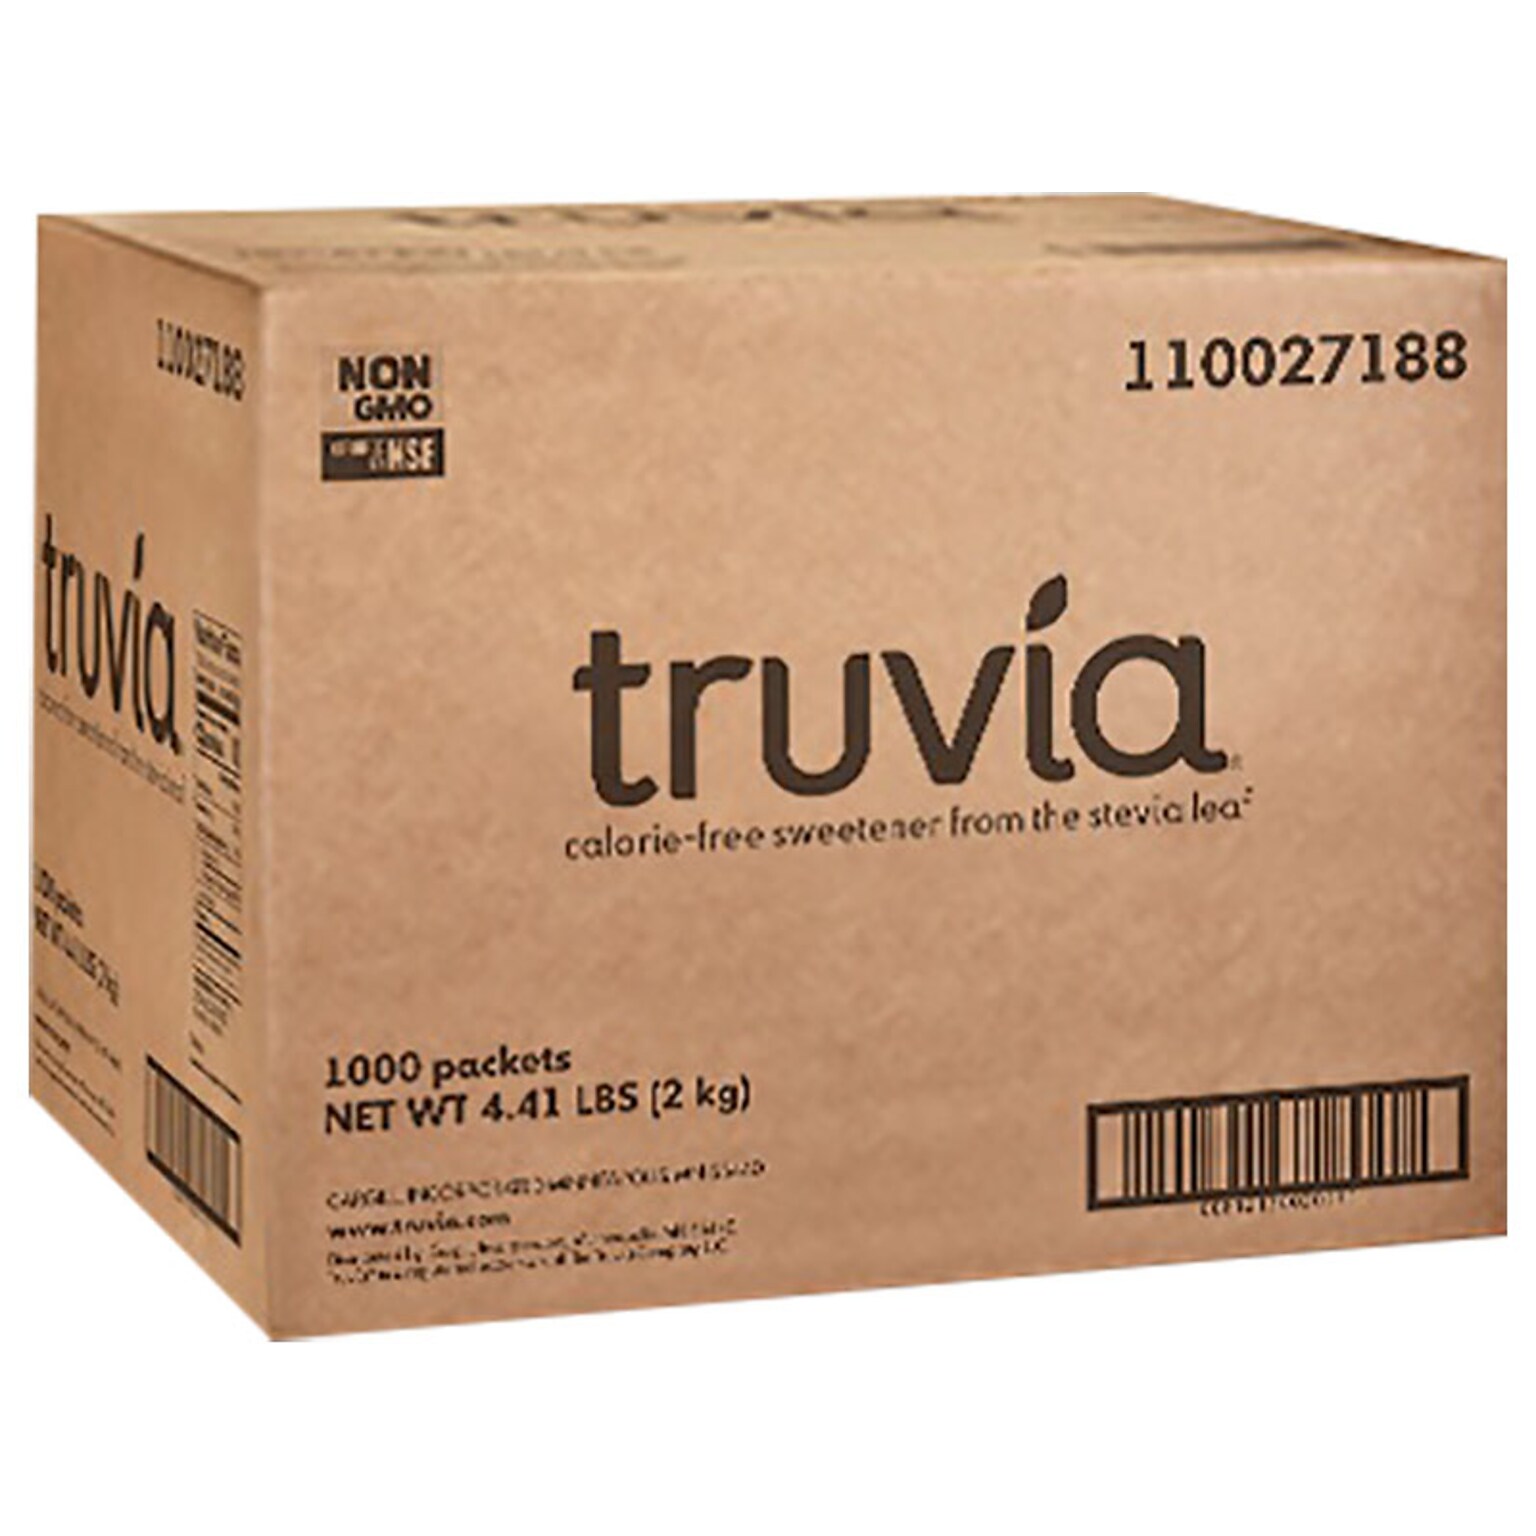 Truvia Natural Sweetener, 1000/Carton (110027188)